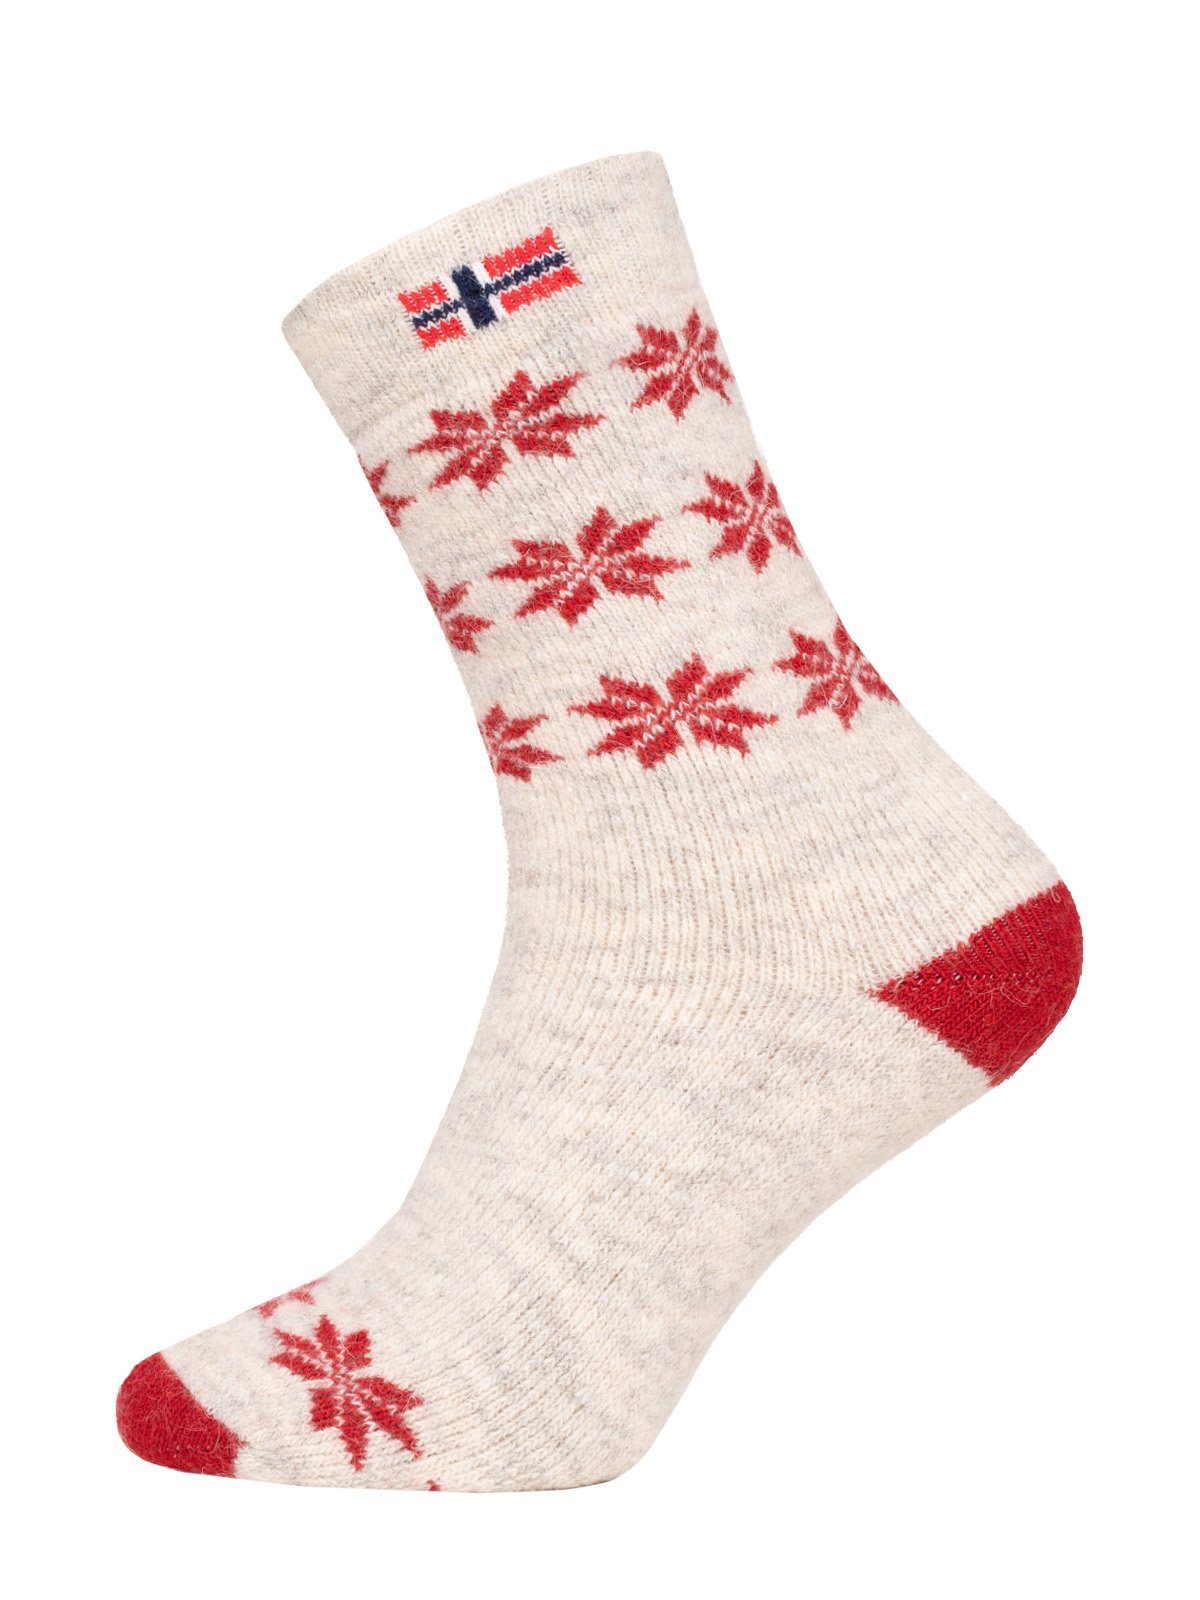 HomeOfSocks Socken Hyggelig Wollsocke Hoher Rot Nordic Dicke Socken Warm Skandinavische Design Norwegischem Wollanteil "Snowflake 80% Kuschelsocken Norwegen"